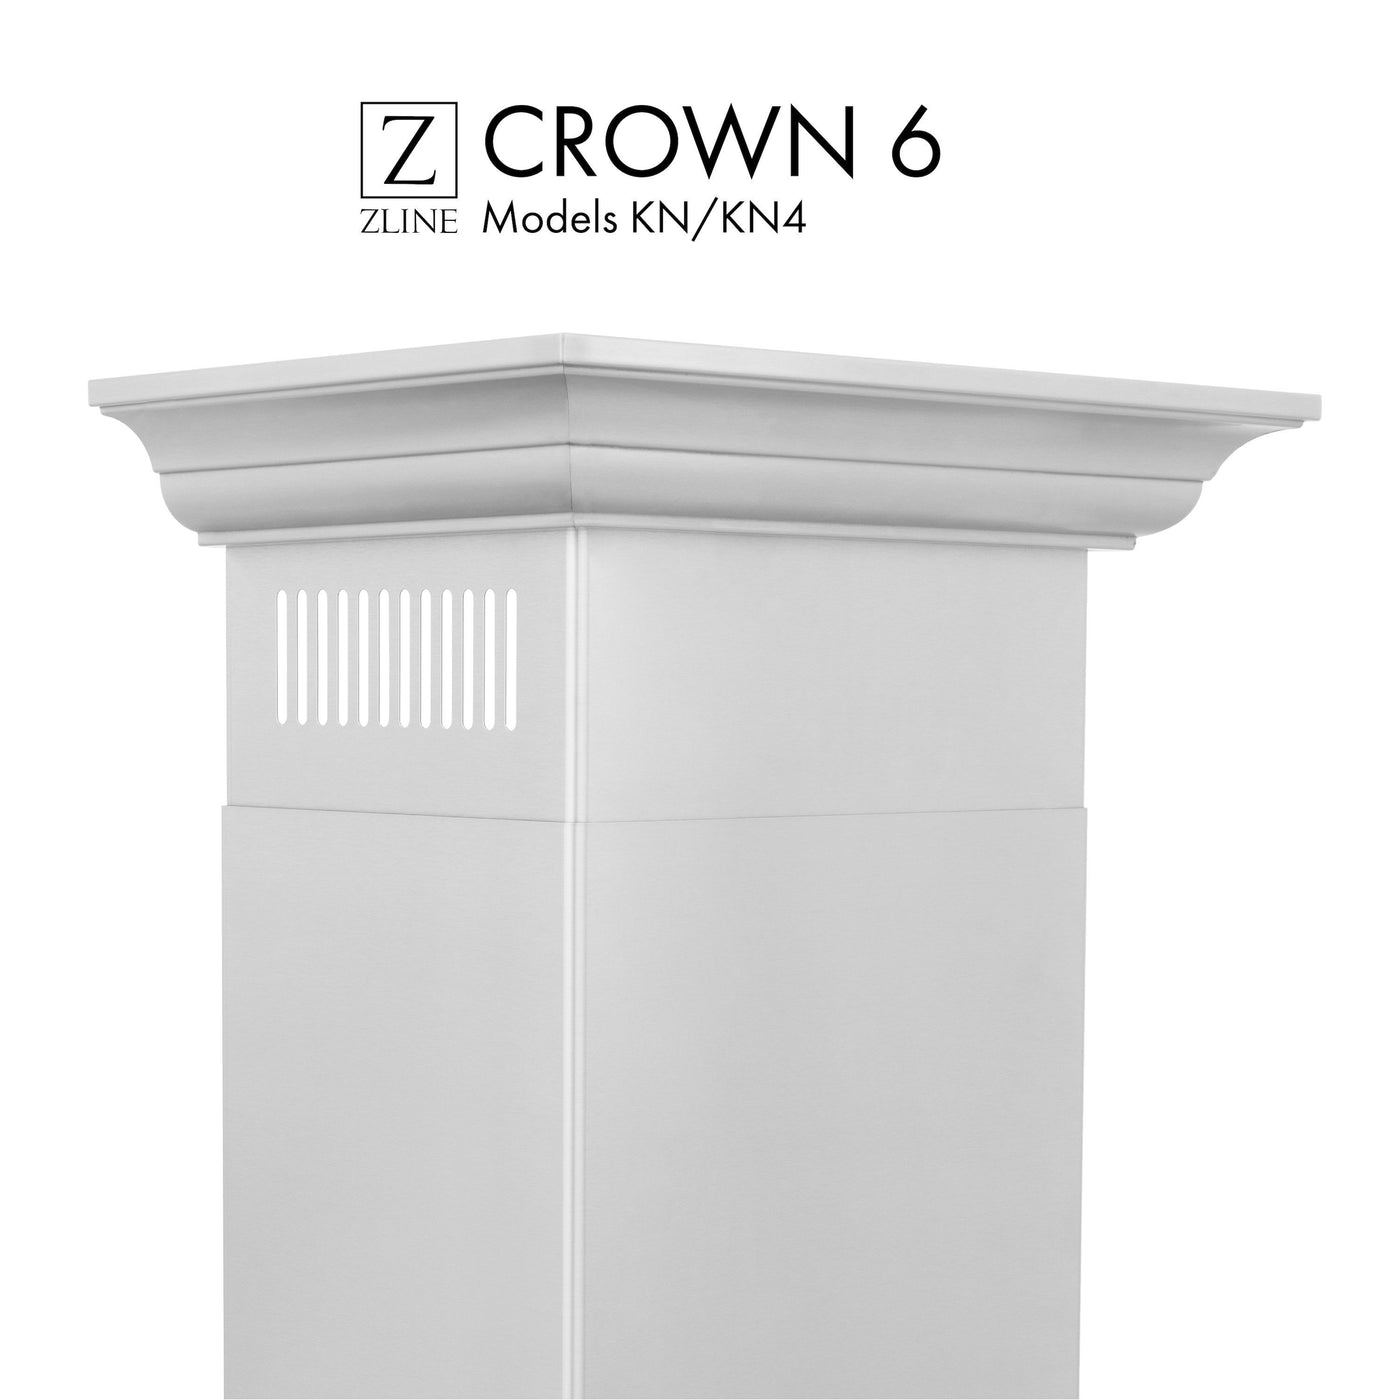 ZLINE Crown Molding Profile 6 for Wall Mount Range Hood (CM6-KN/KN4)